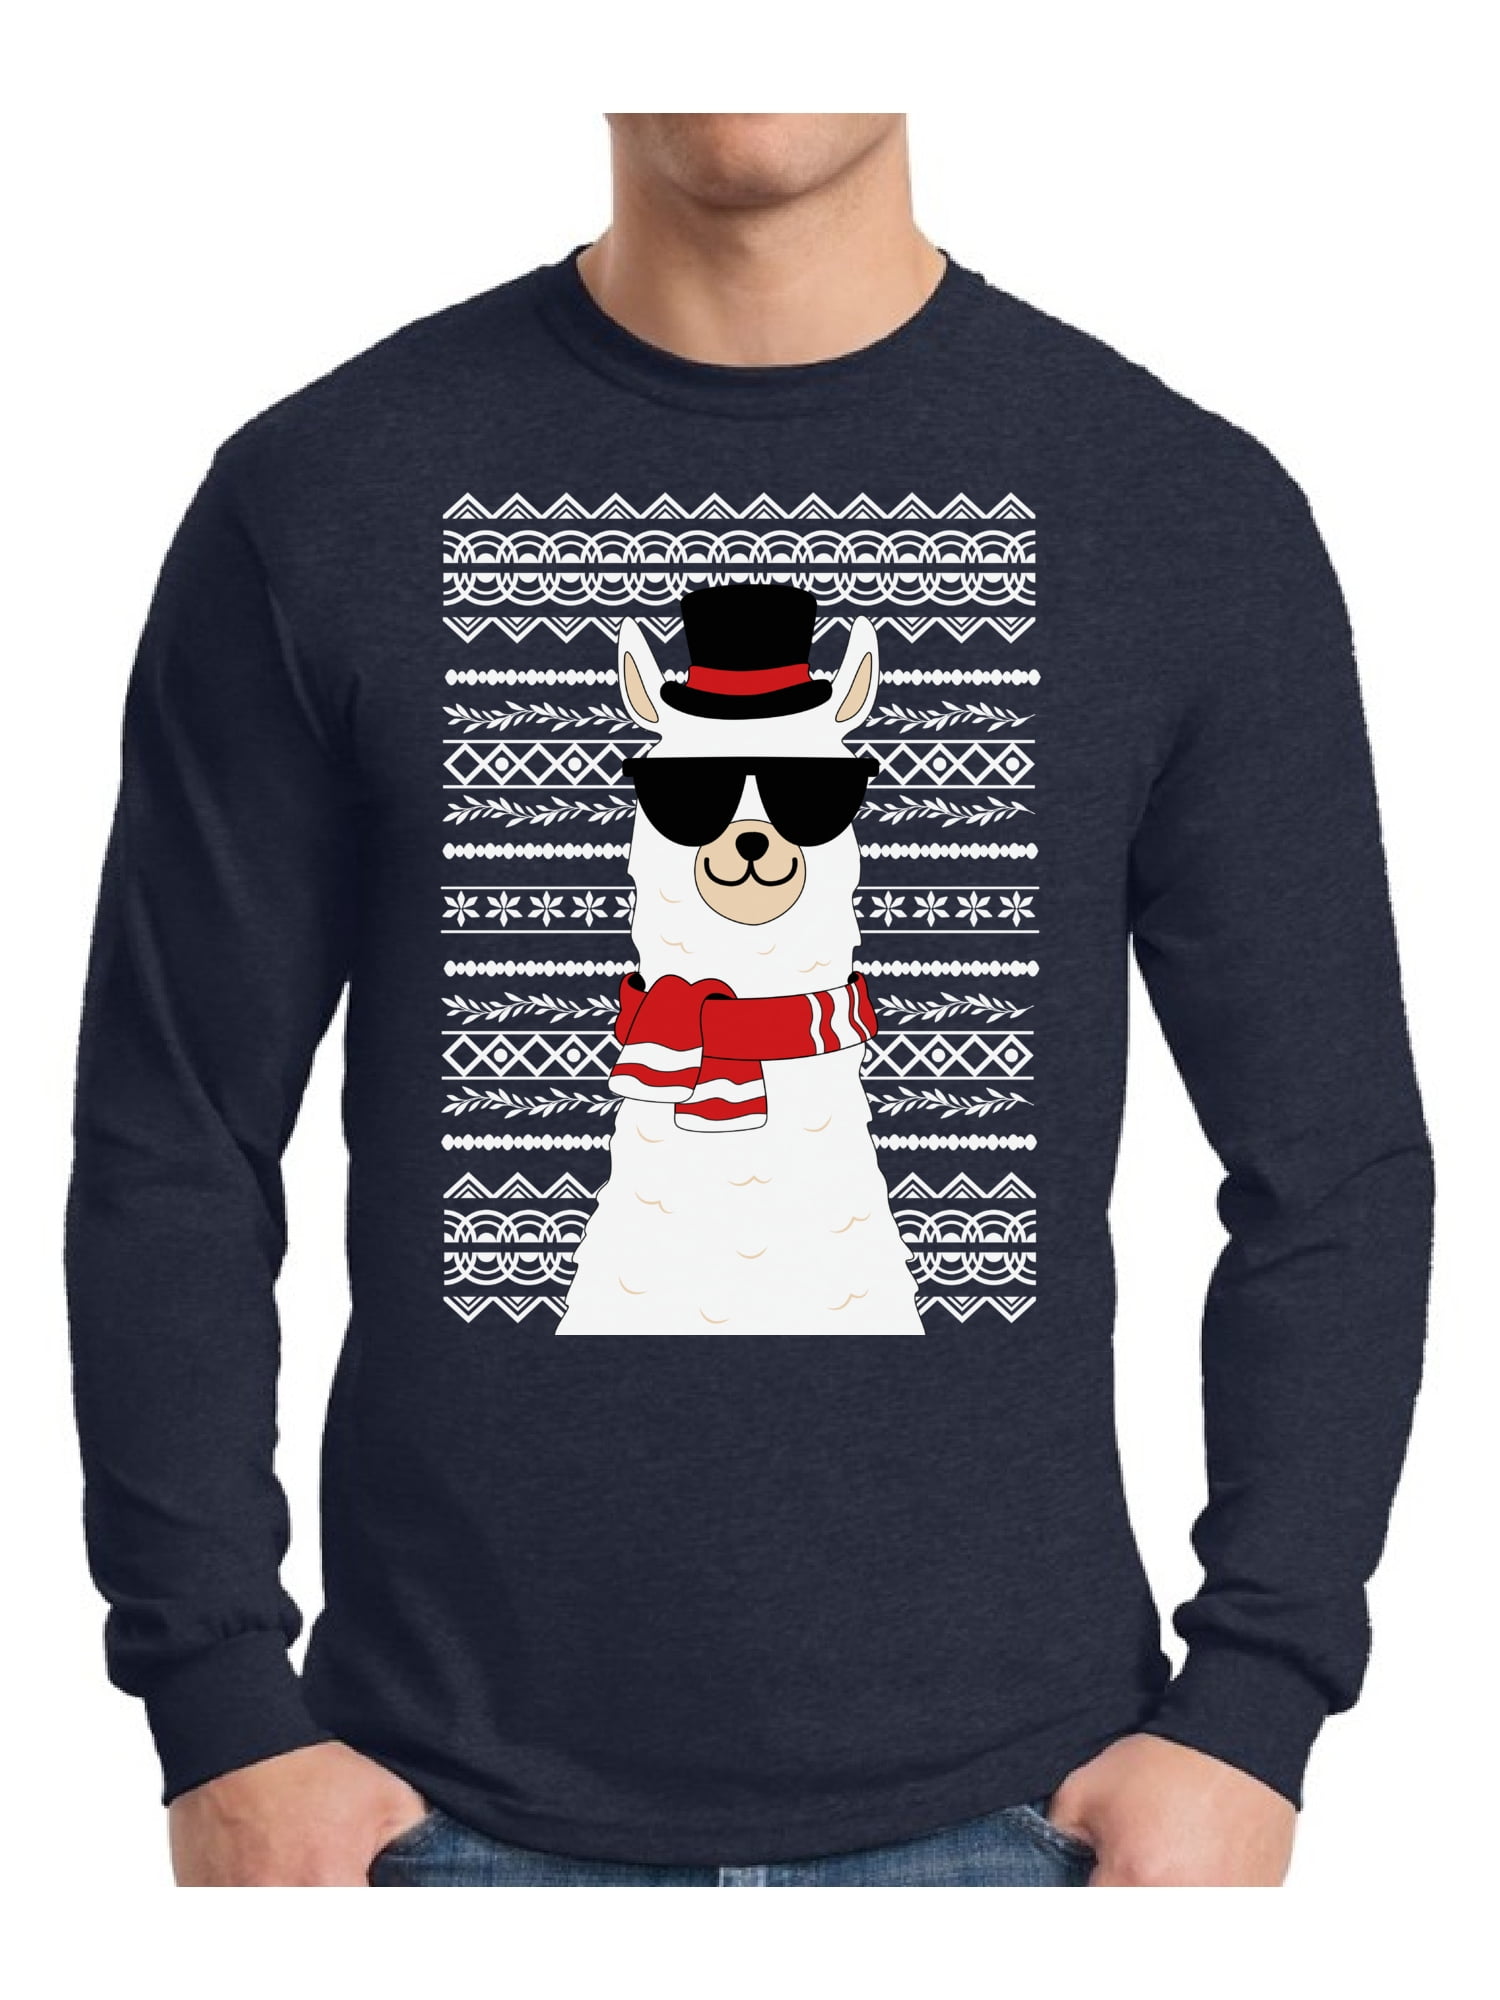 Awkward Styles Llama Christmas Sweatshirt Ugly Llama Christmas Sweater Xmas Gifts 